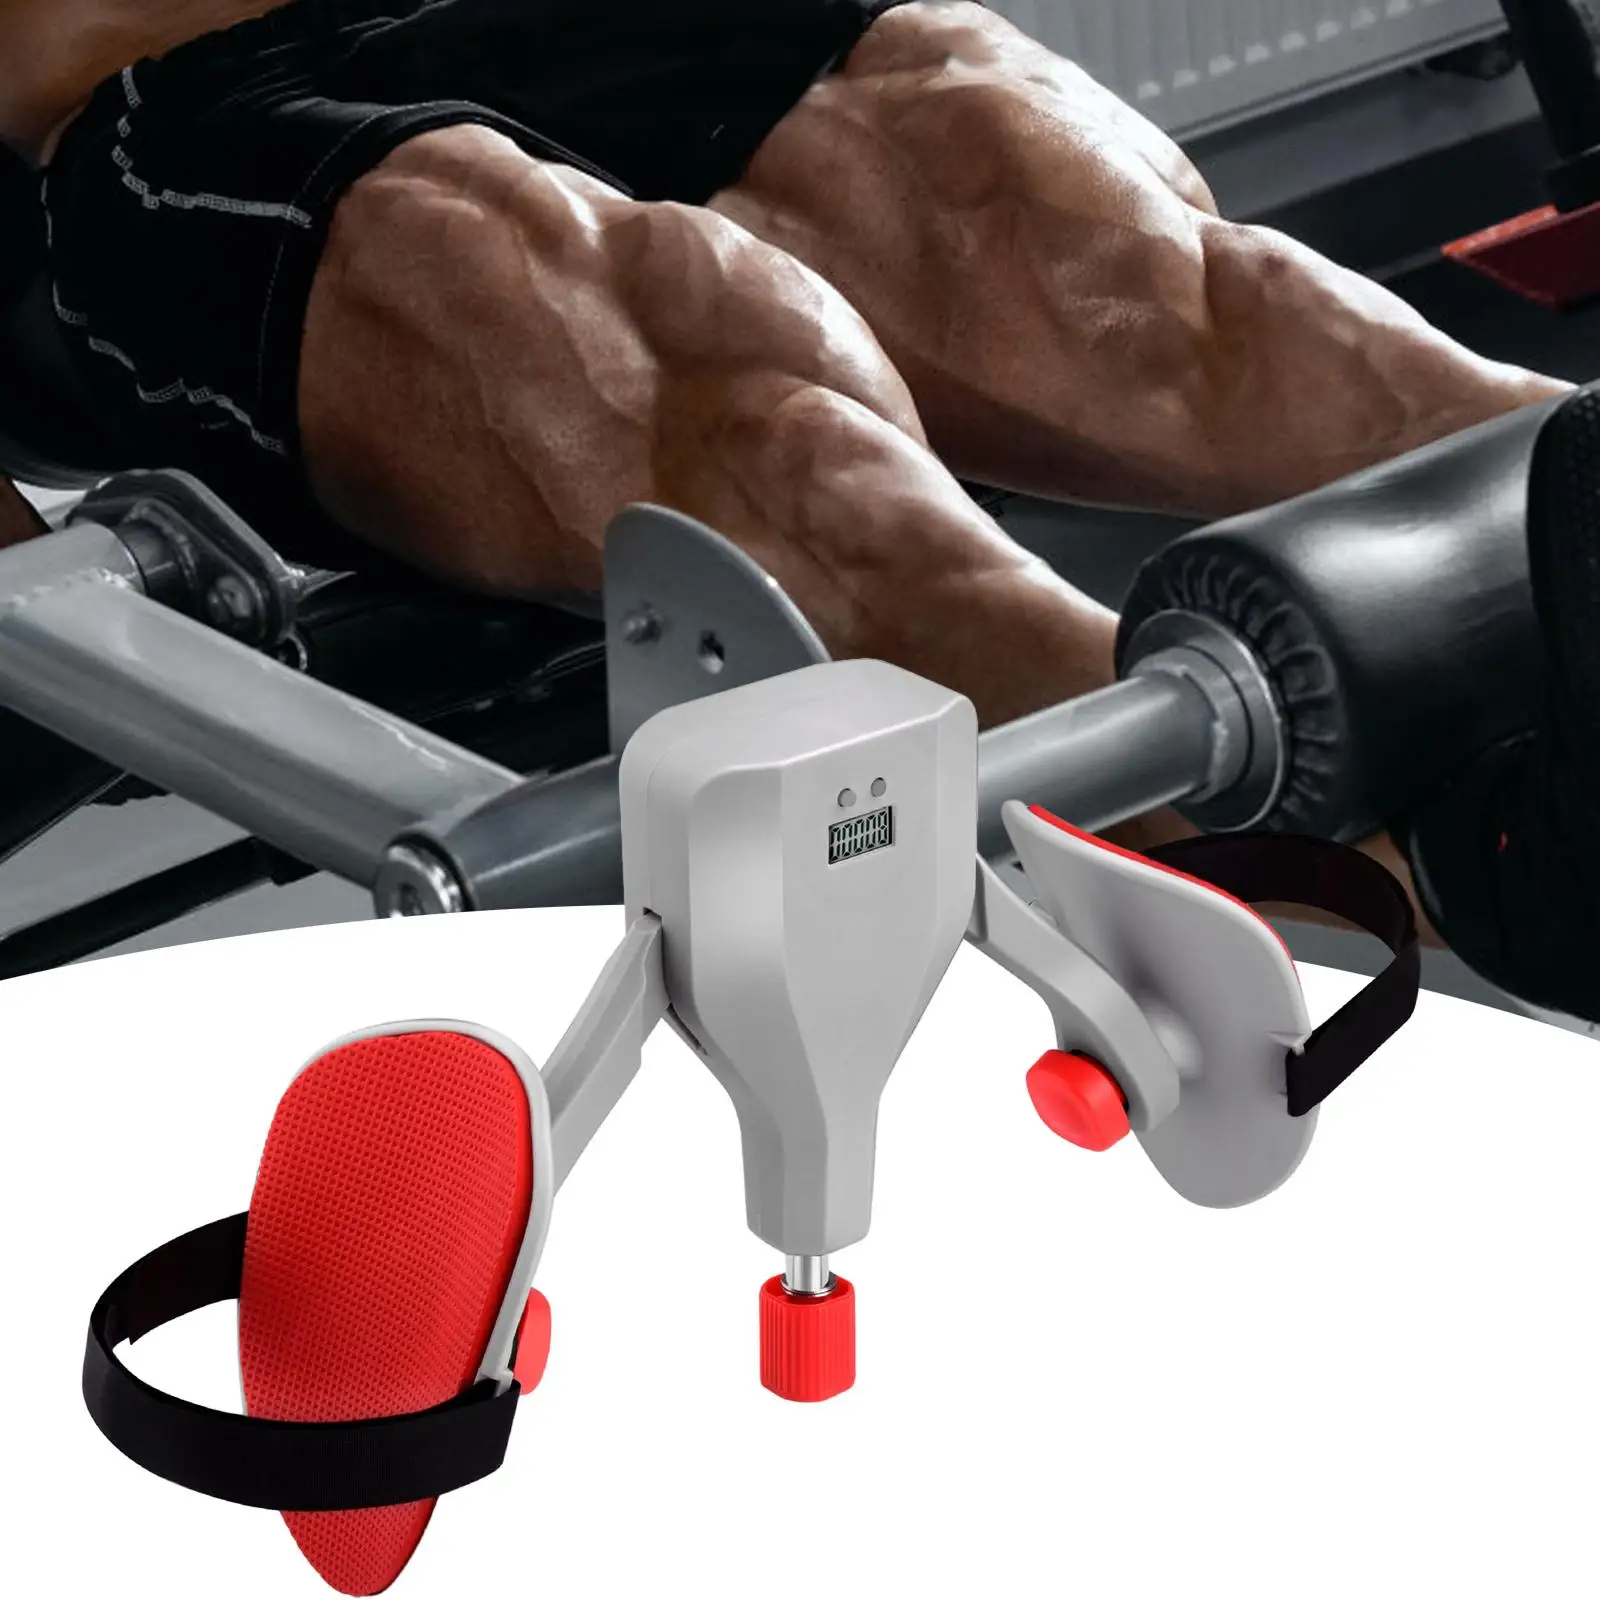 Thigh Exerciser, Thigh Trimmer Strengthening Device, Equipment Trainer, Thigh Toner, Leg Exercise Machine for Home Fitness